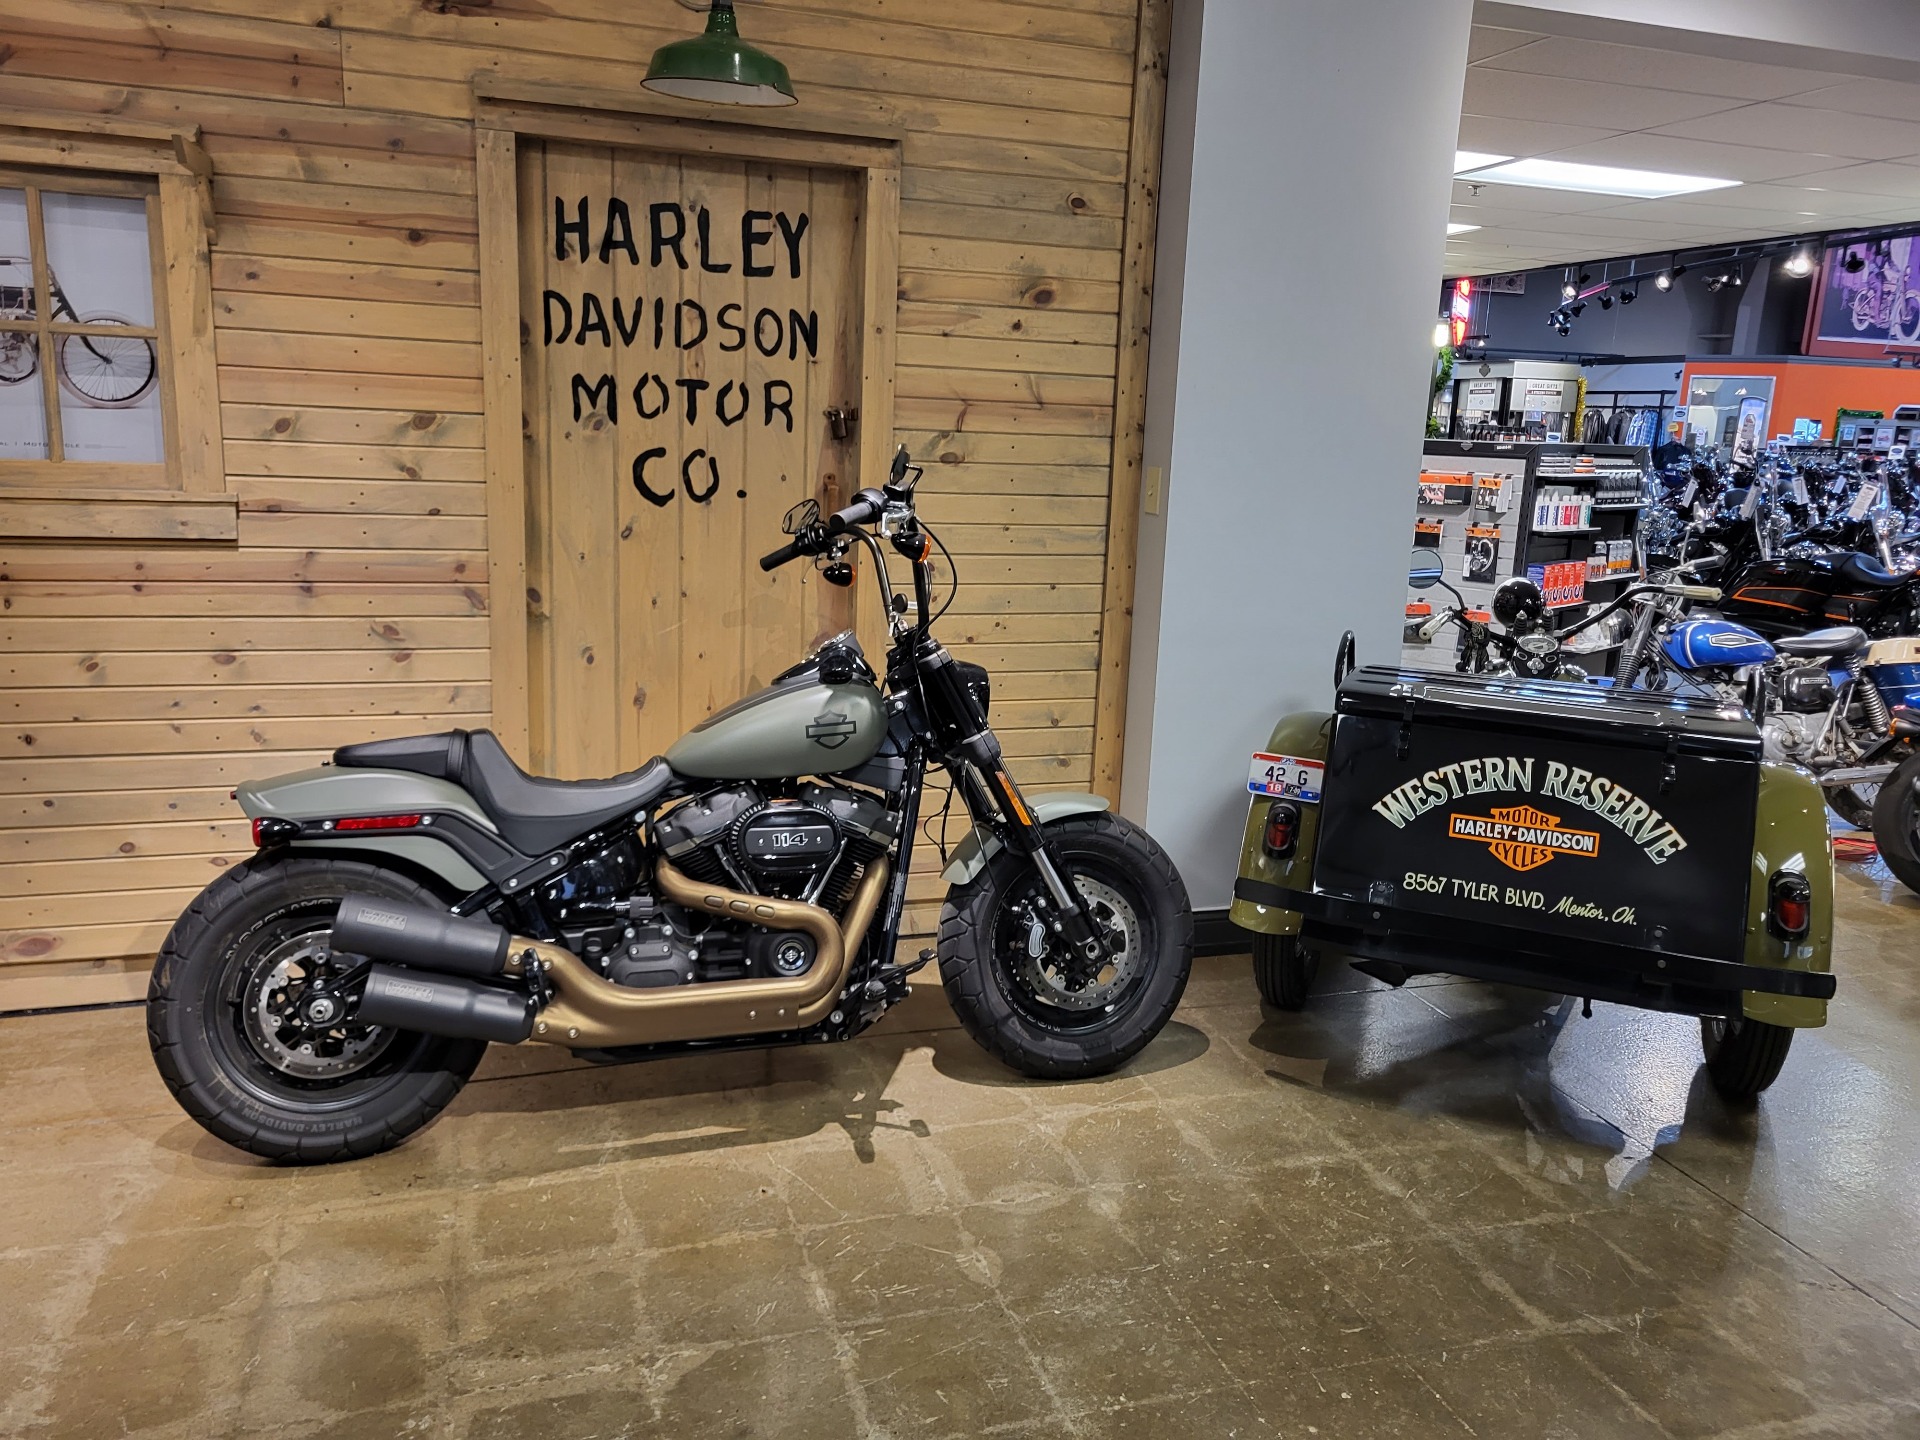 2021 Harley-Davidson Fat Bob® 114 in Mentor, Ohio - Photo 1